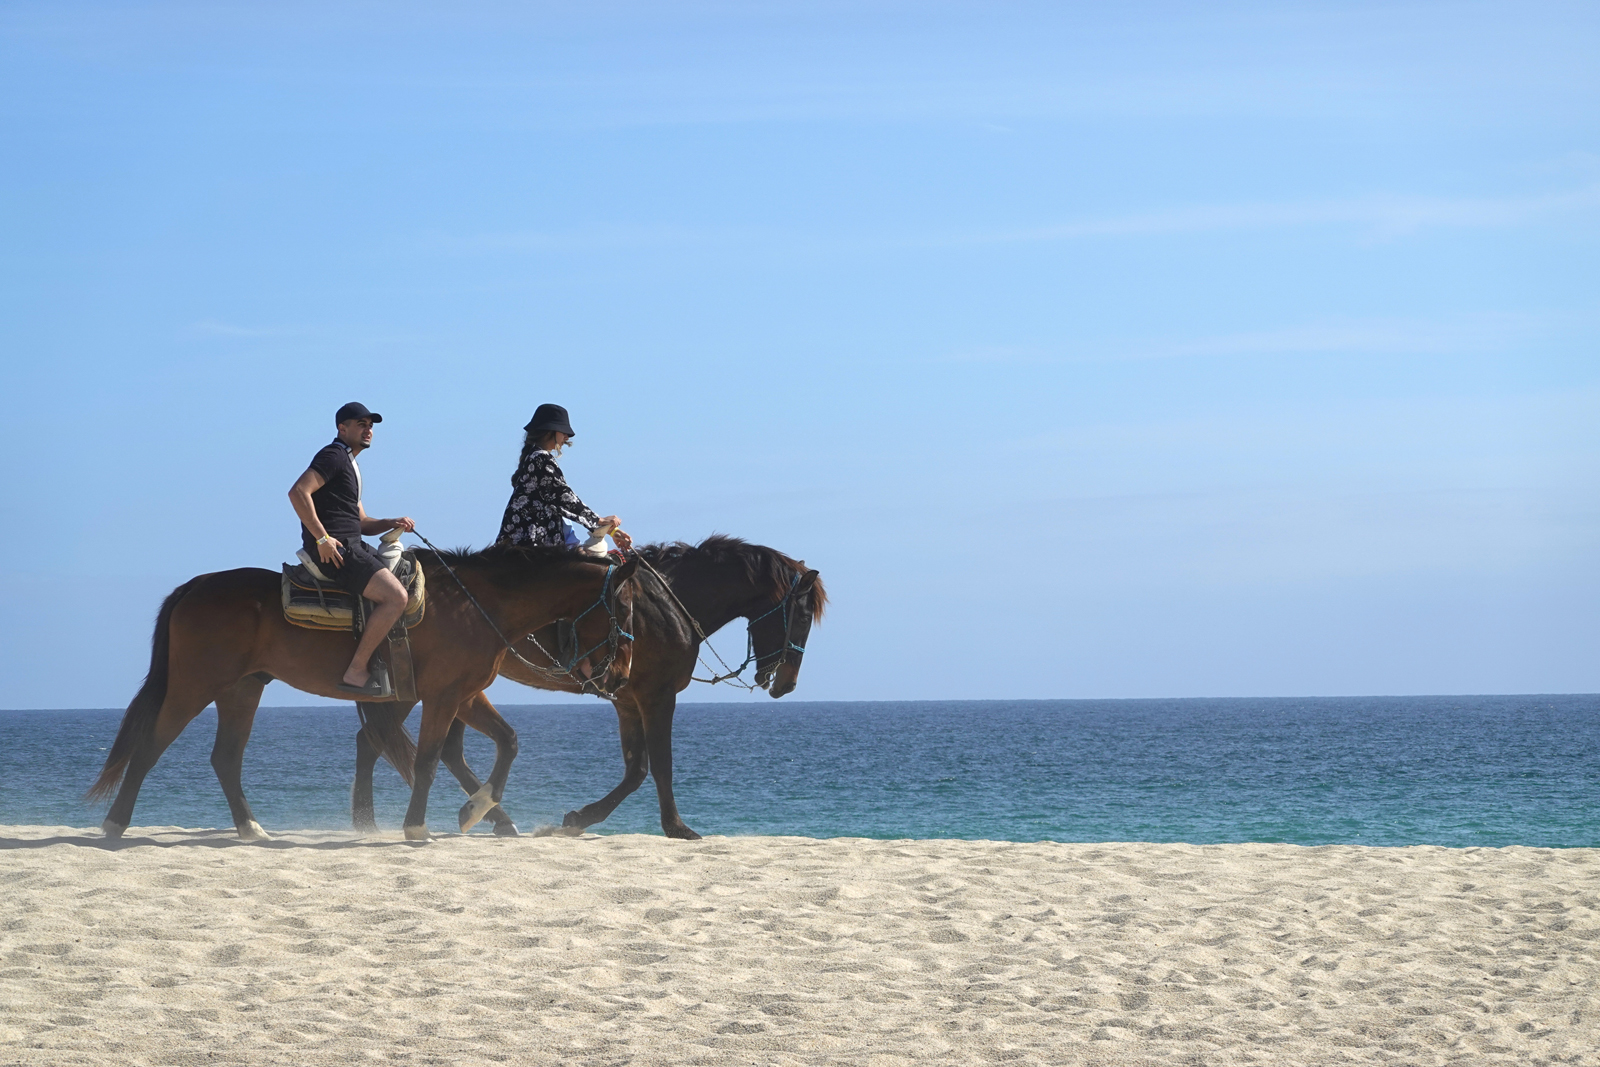 Two riders on horses on a coastal beach.